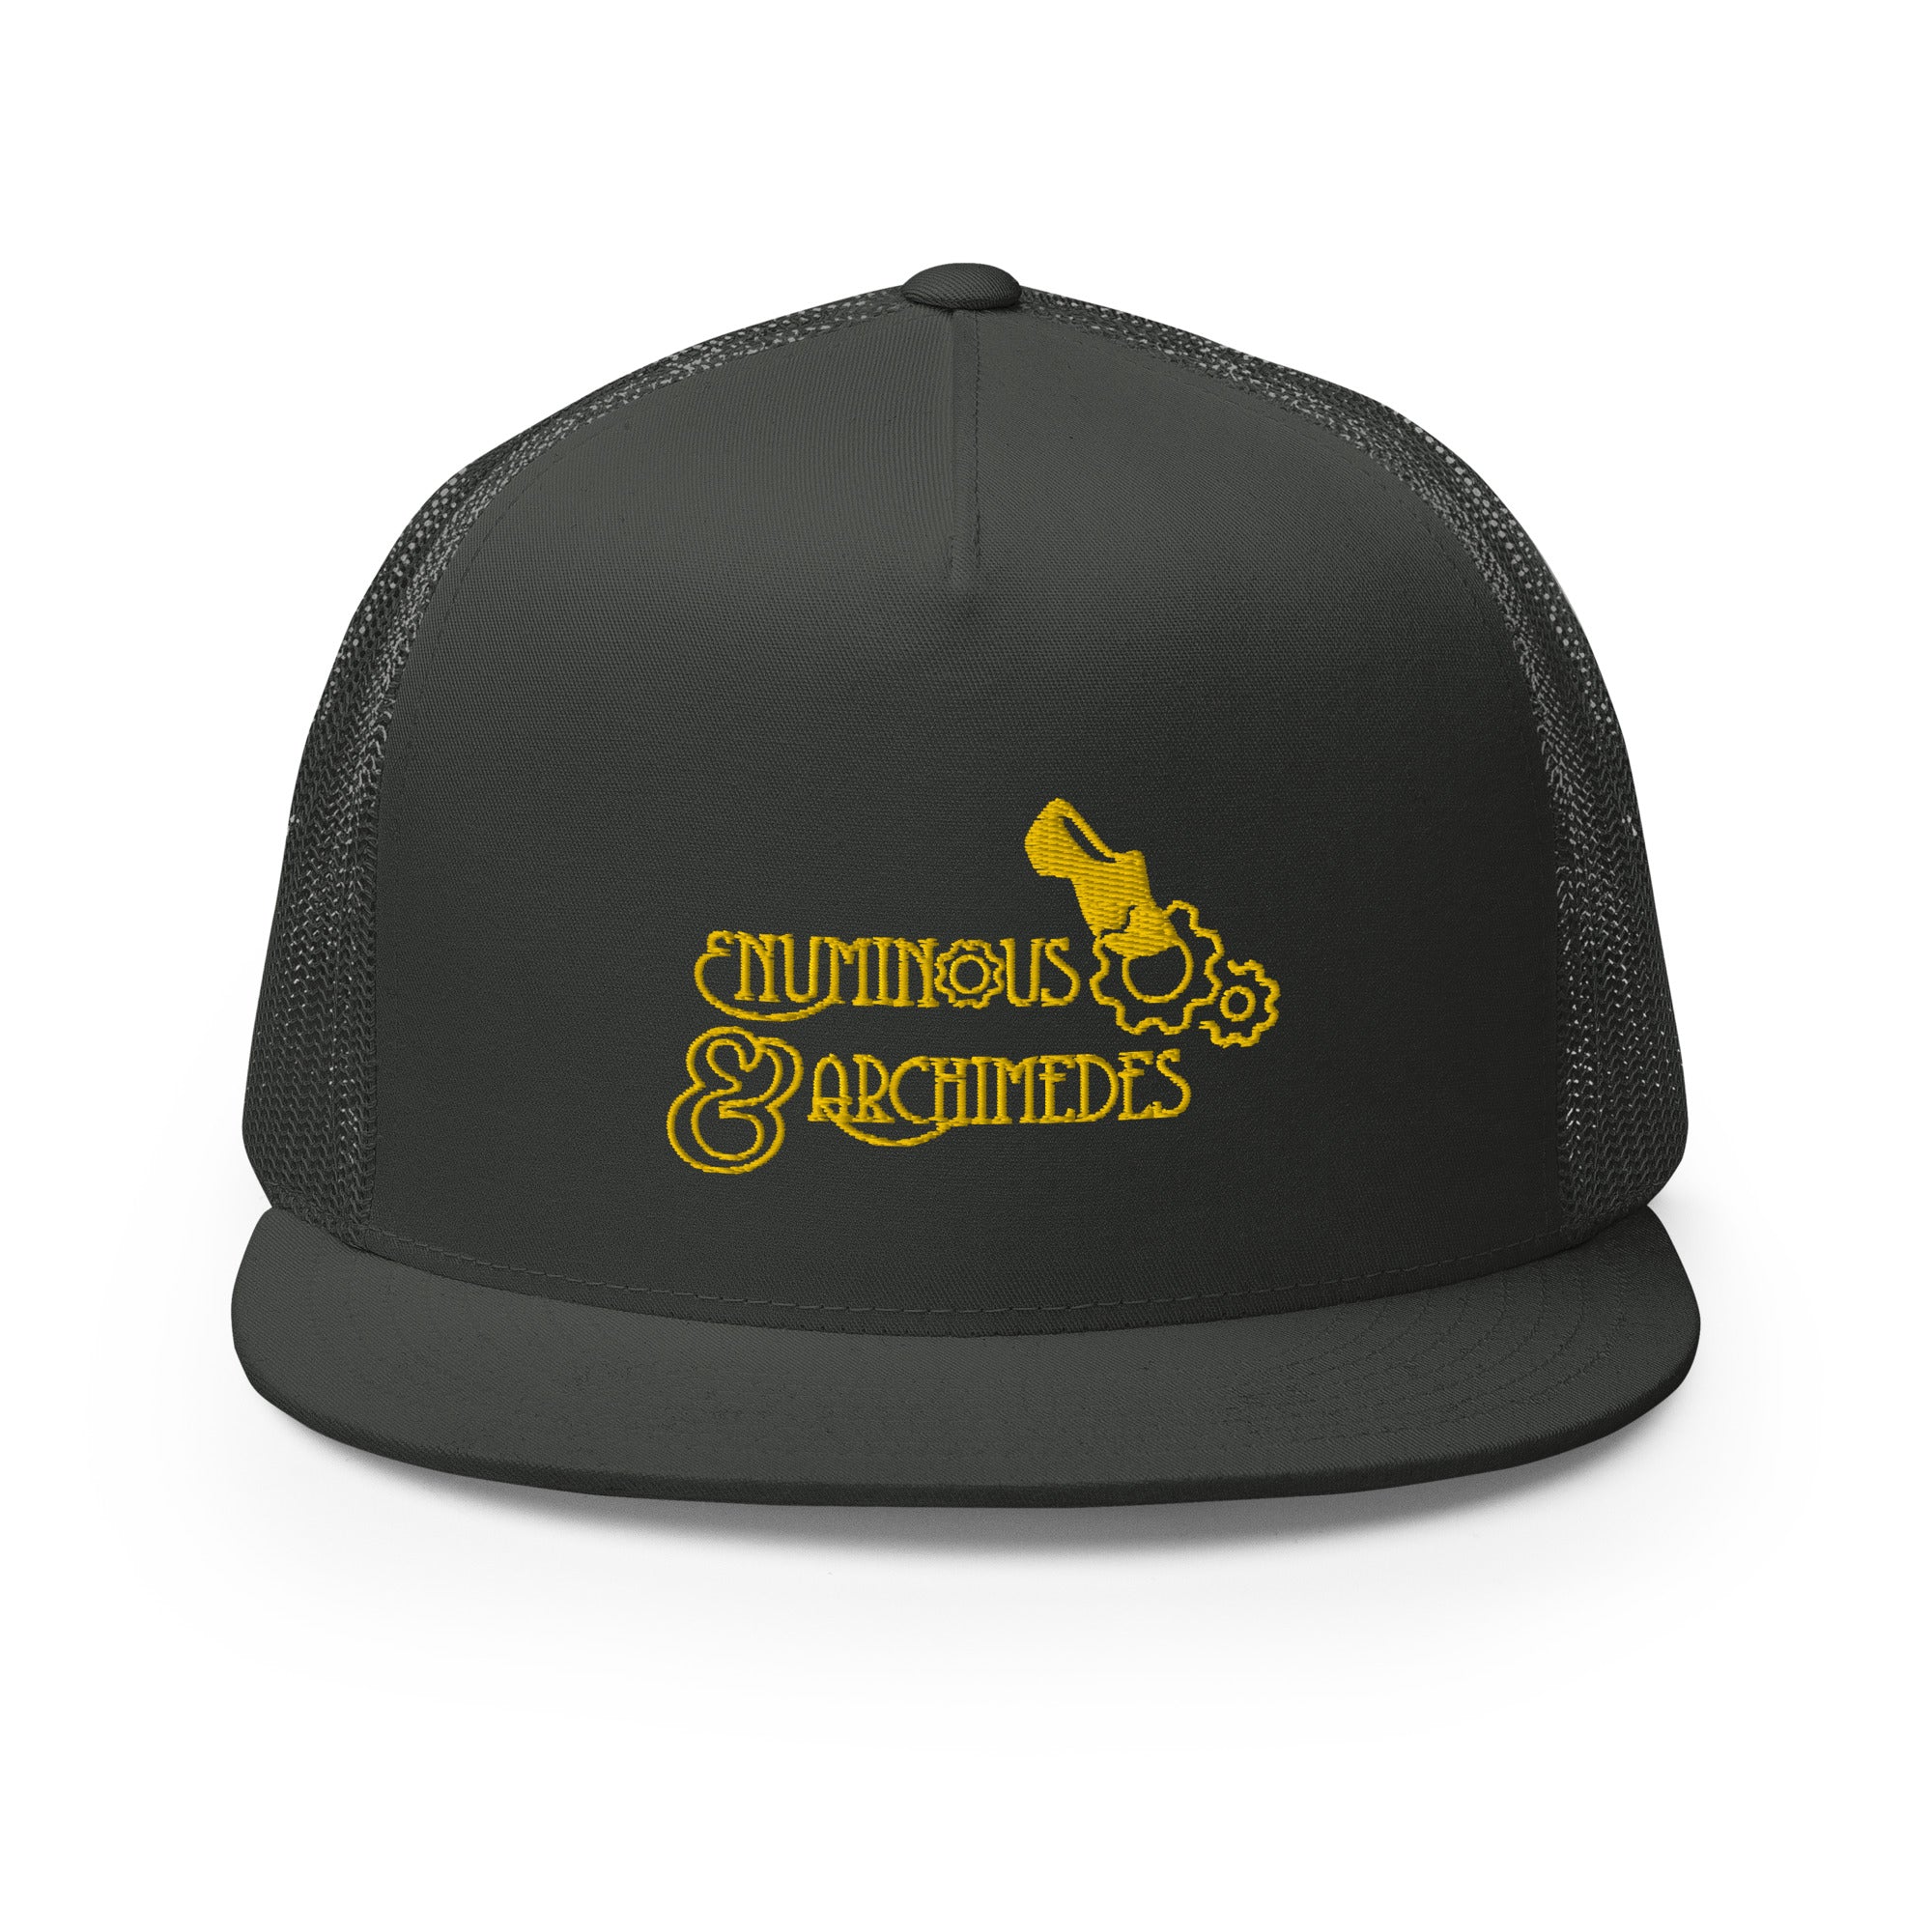 eNuminous & Archimedes - Trucker Cap